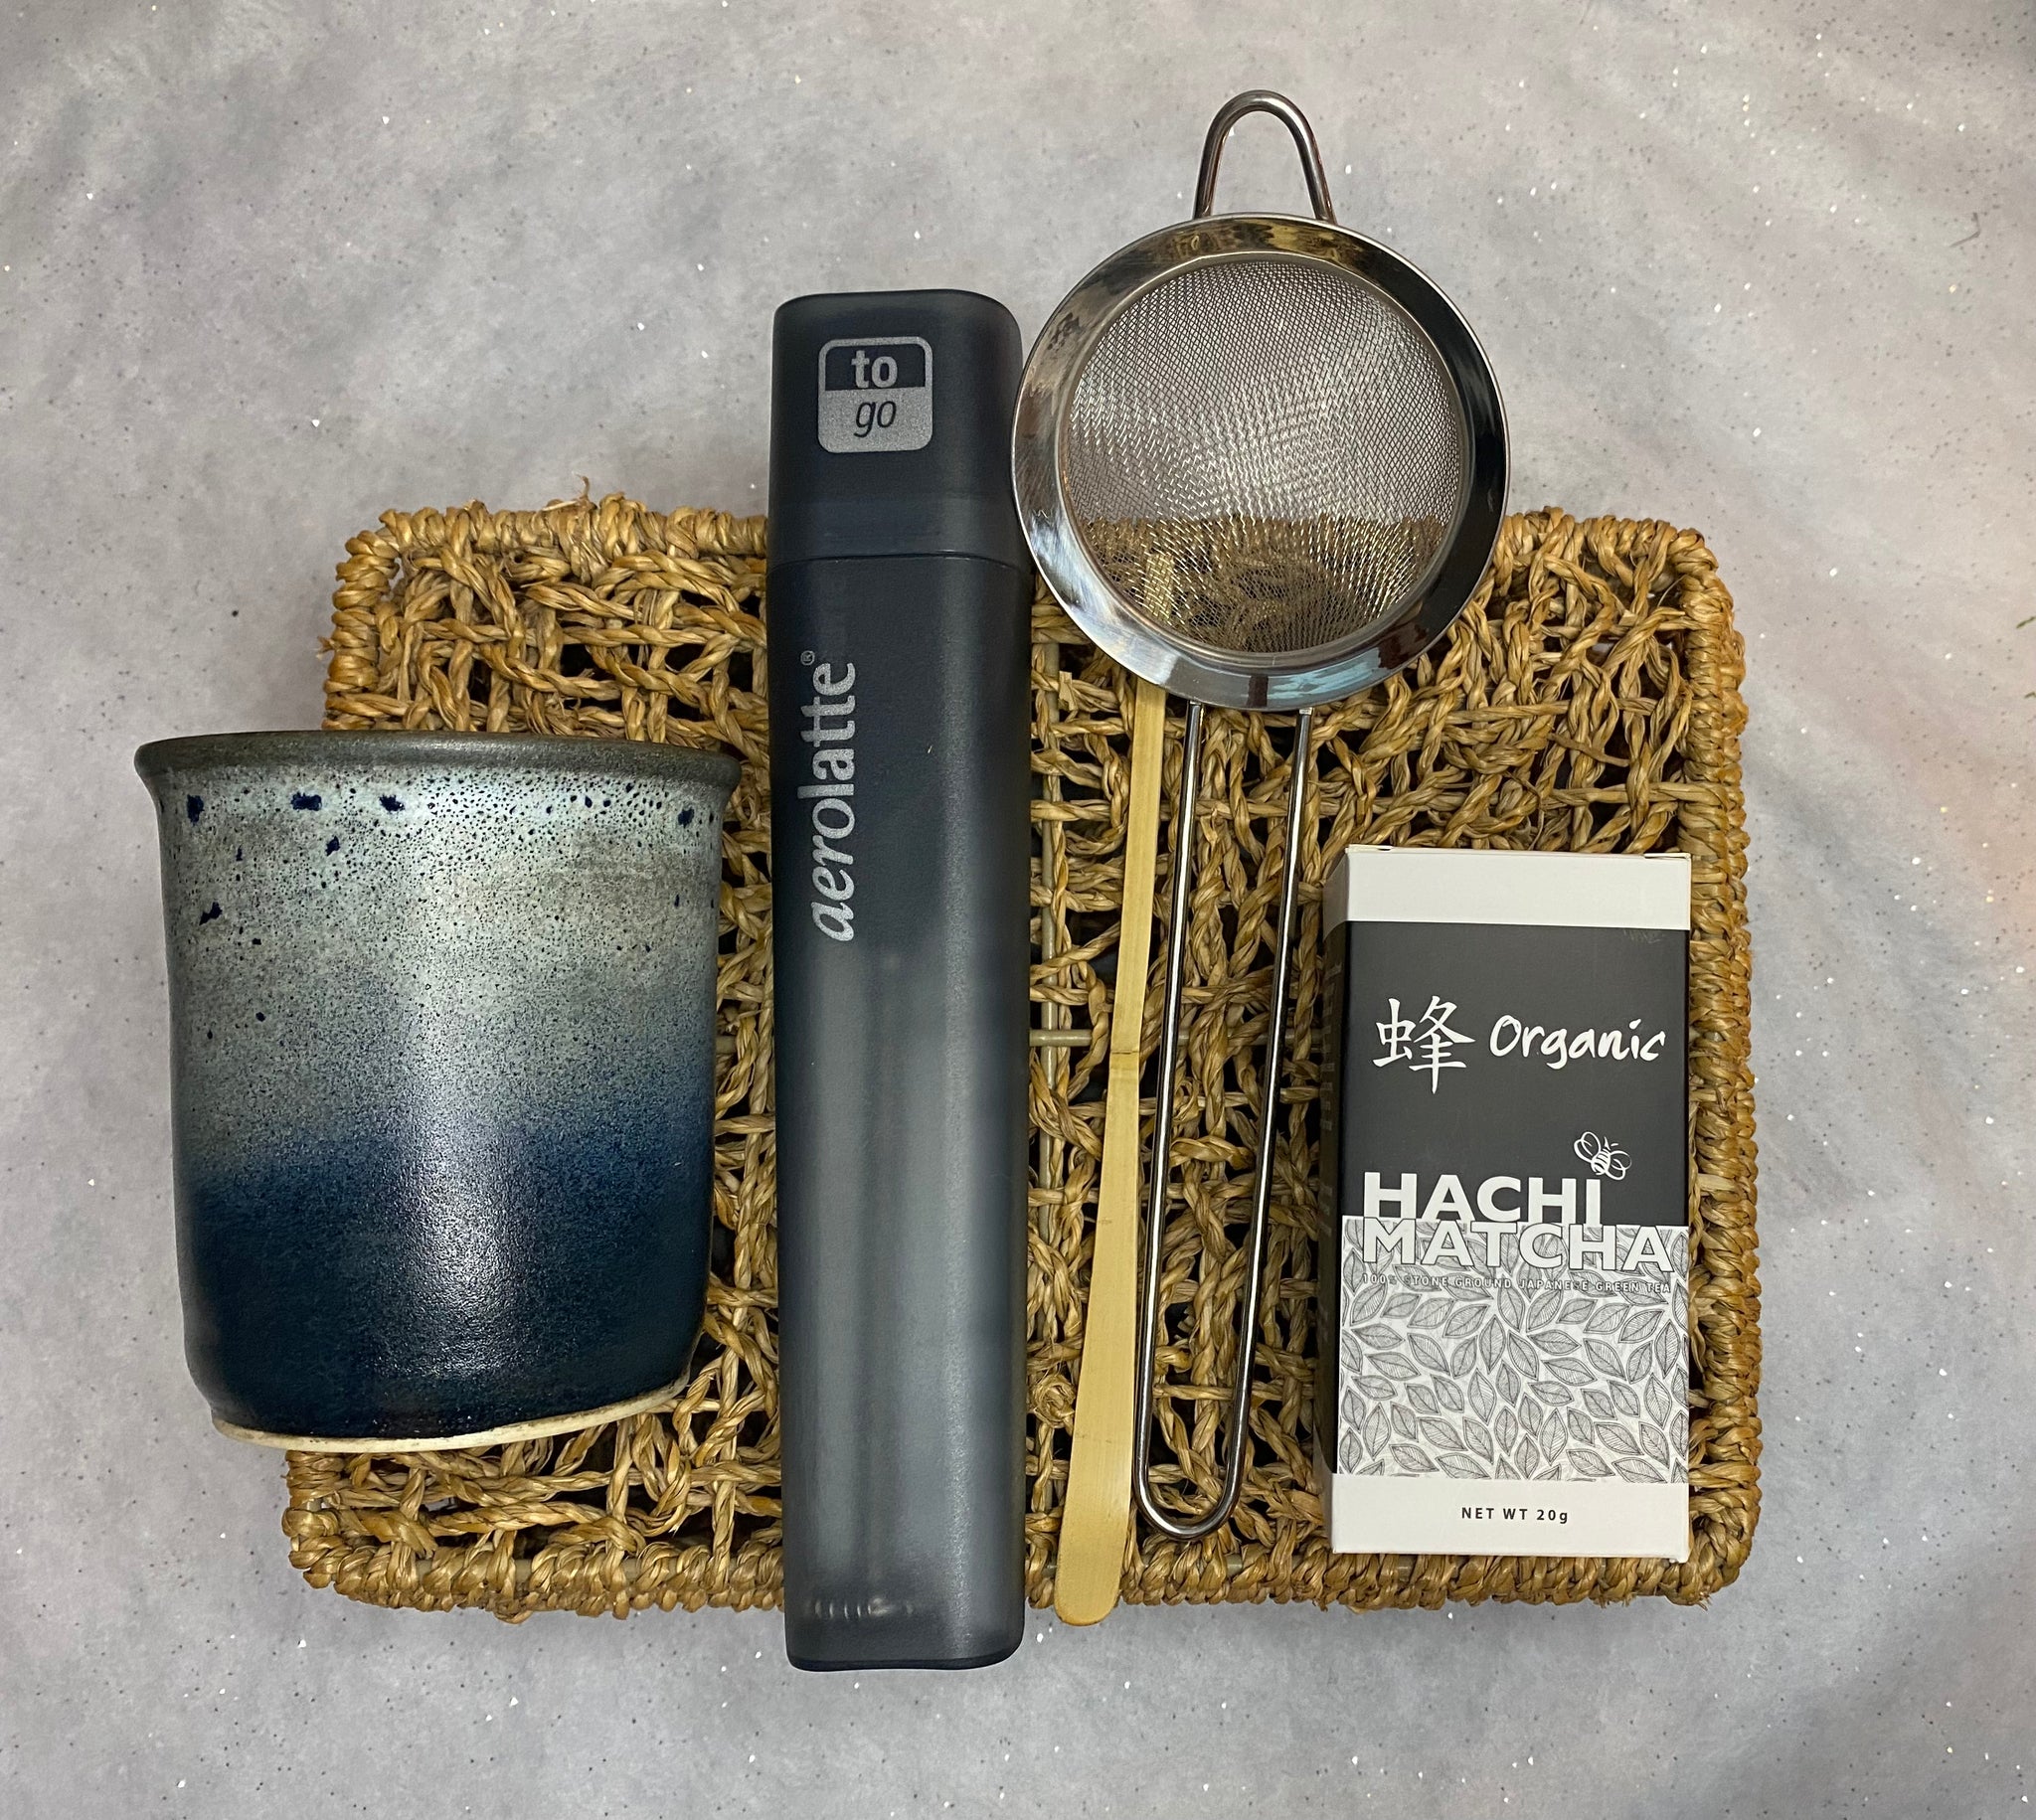 Deluxe Modern Matcha Kit with Hachi Matcha Organic